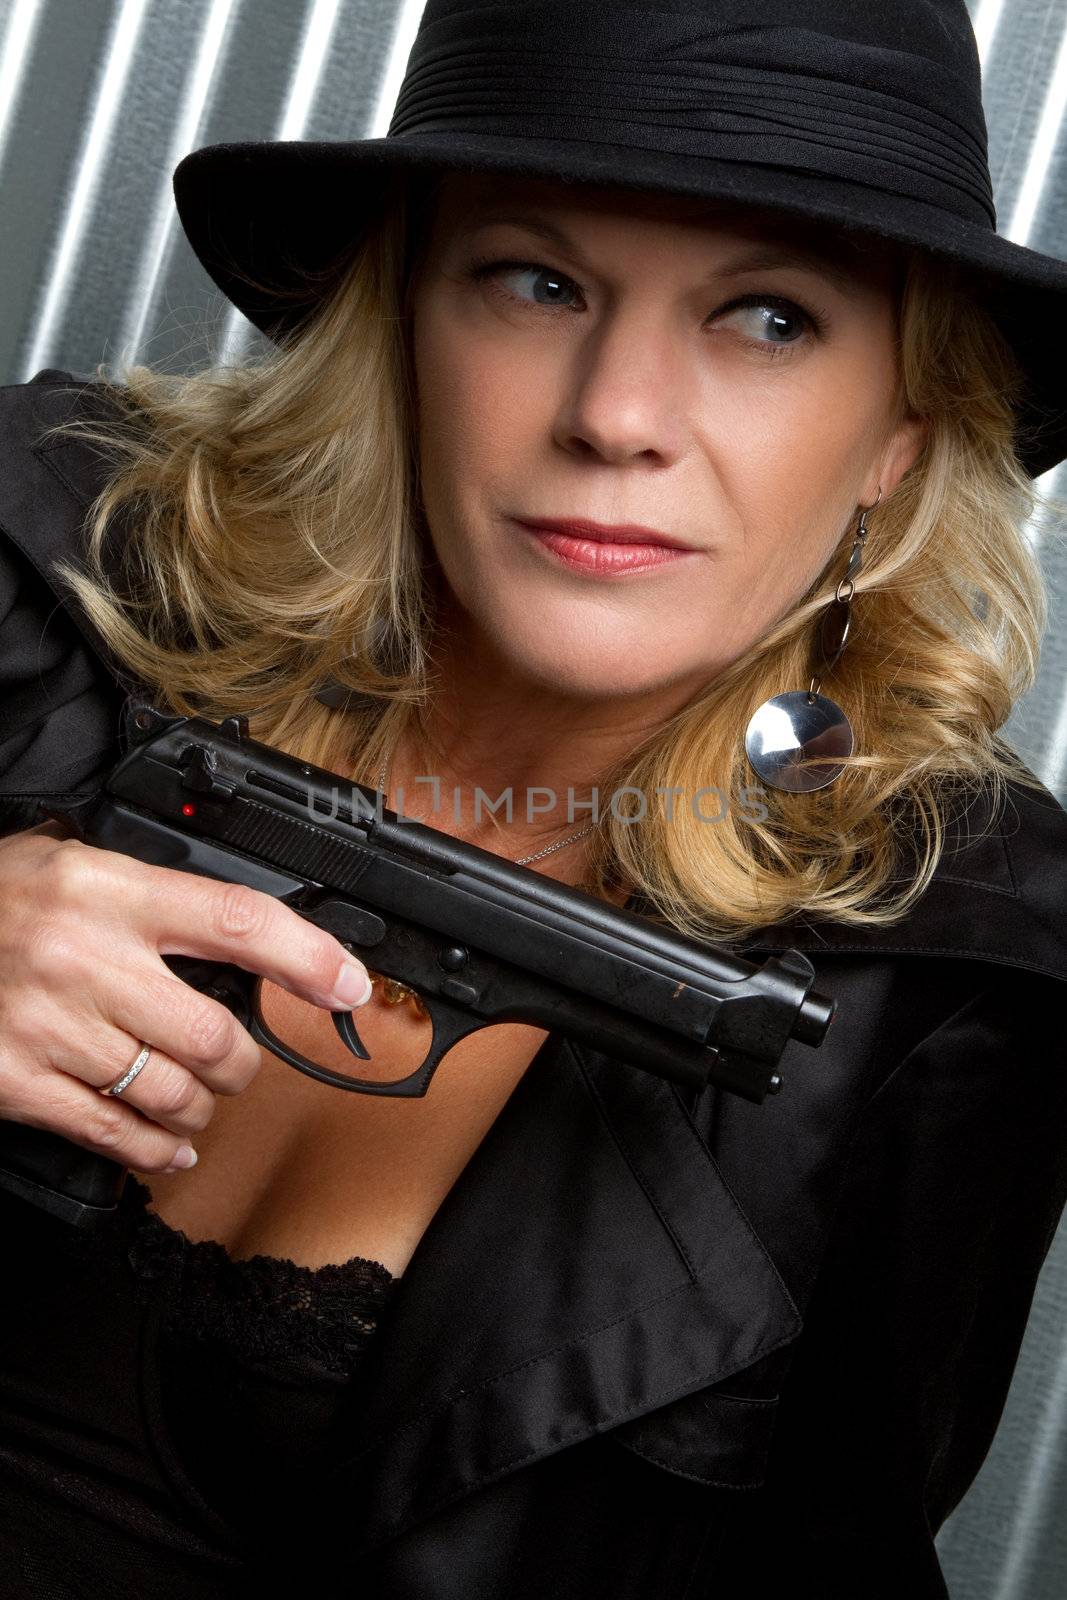 Blond detective woman holding gun